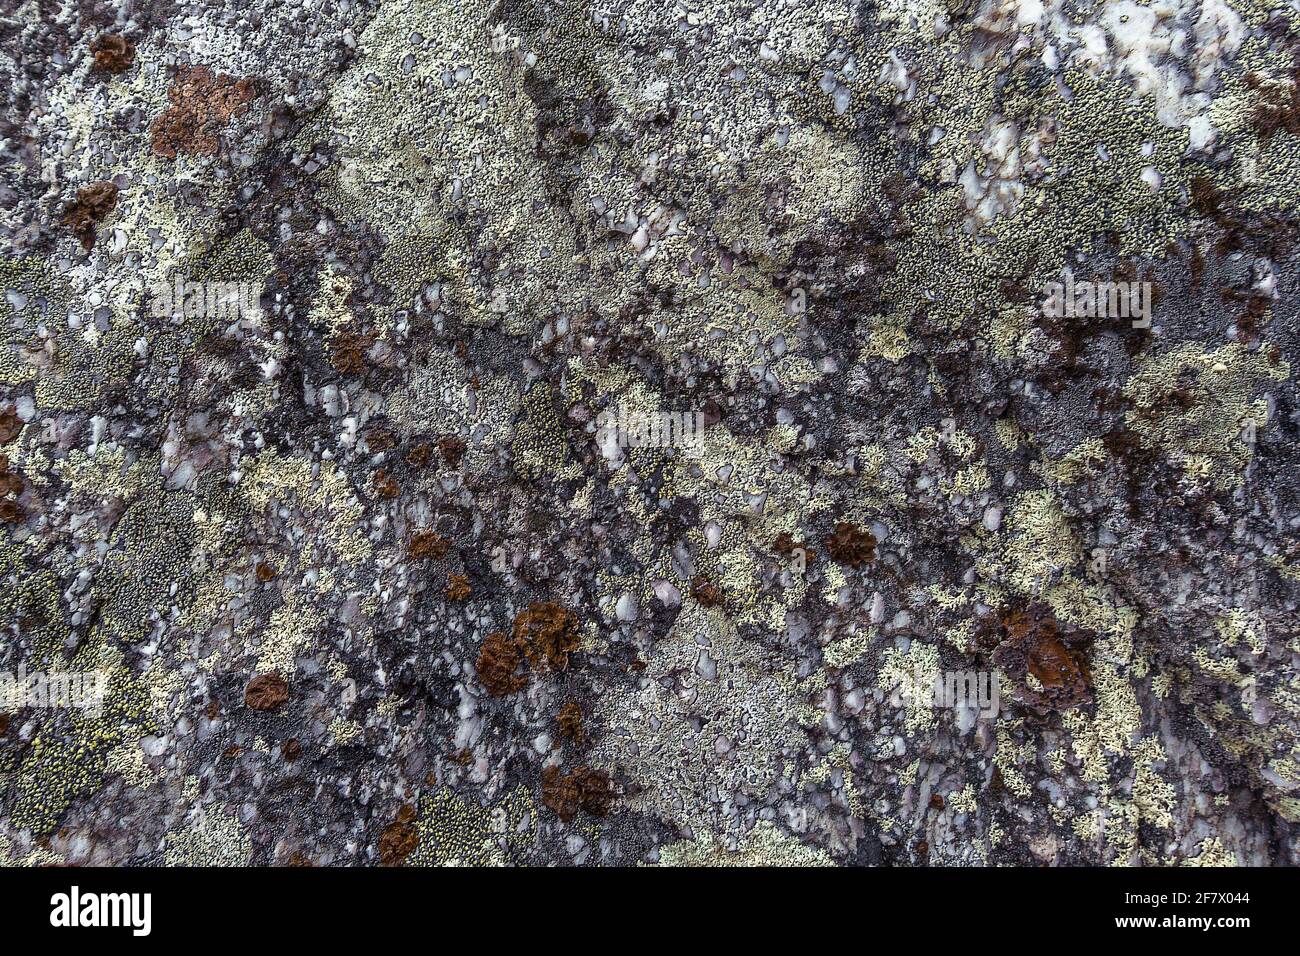 https://c8.alamy.com/comp/2F7X044/lichen-on-a-rocks-a-camo-style-background-natural-moss-texture-2F7X044.jpg